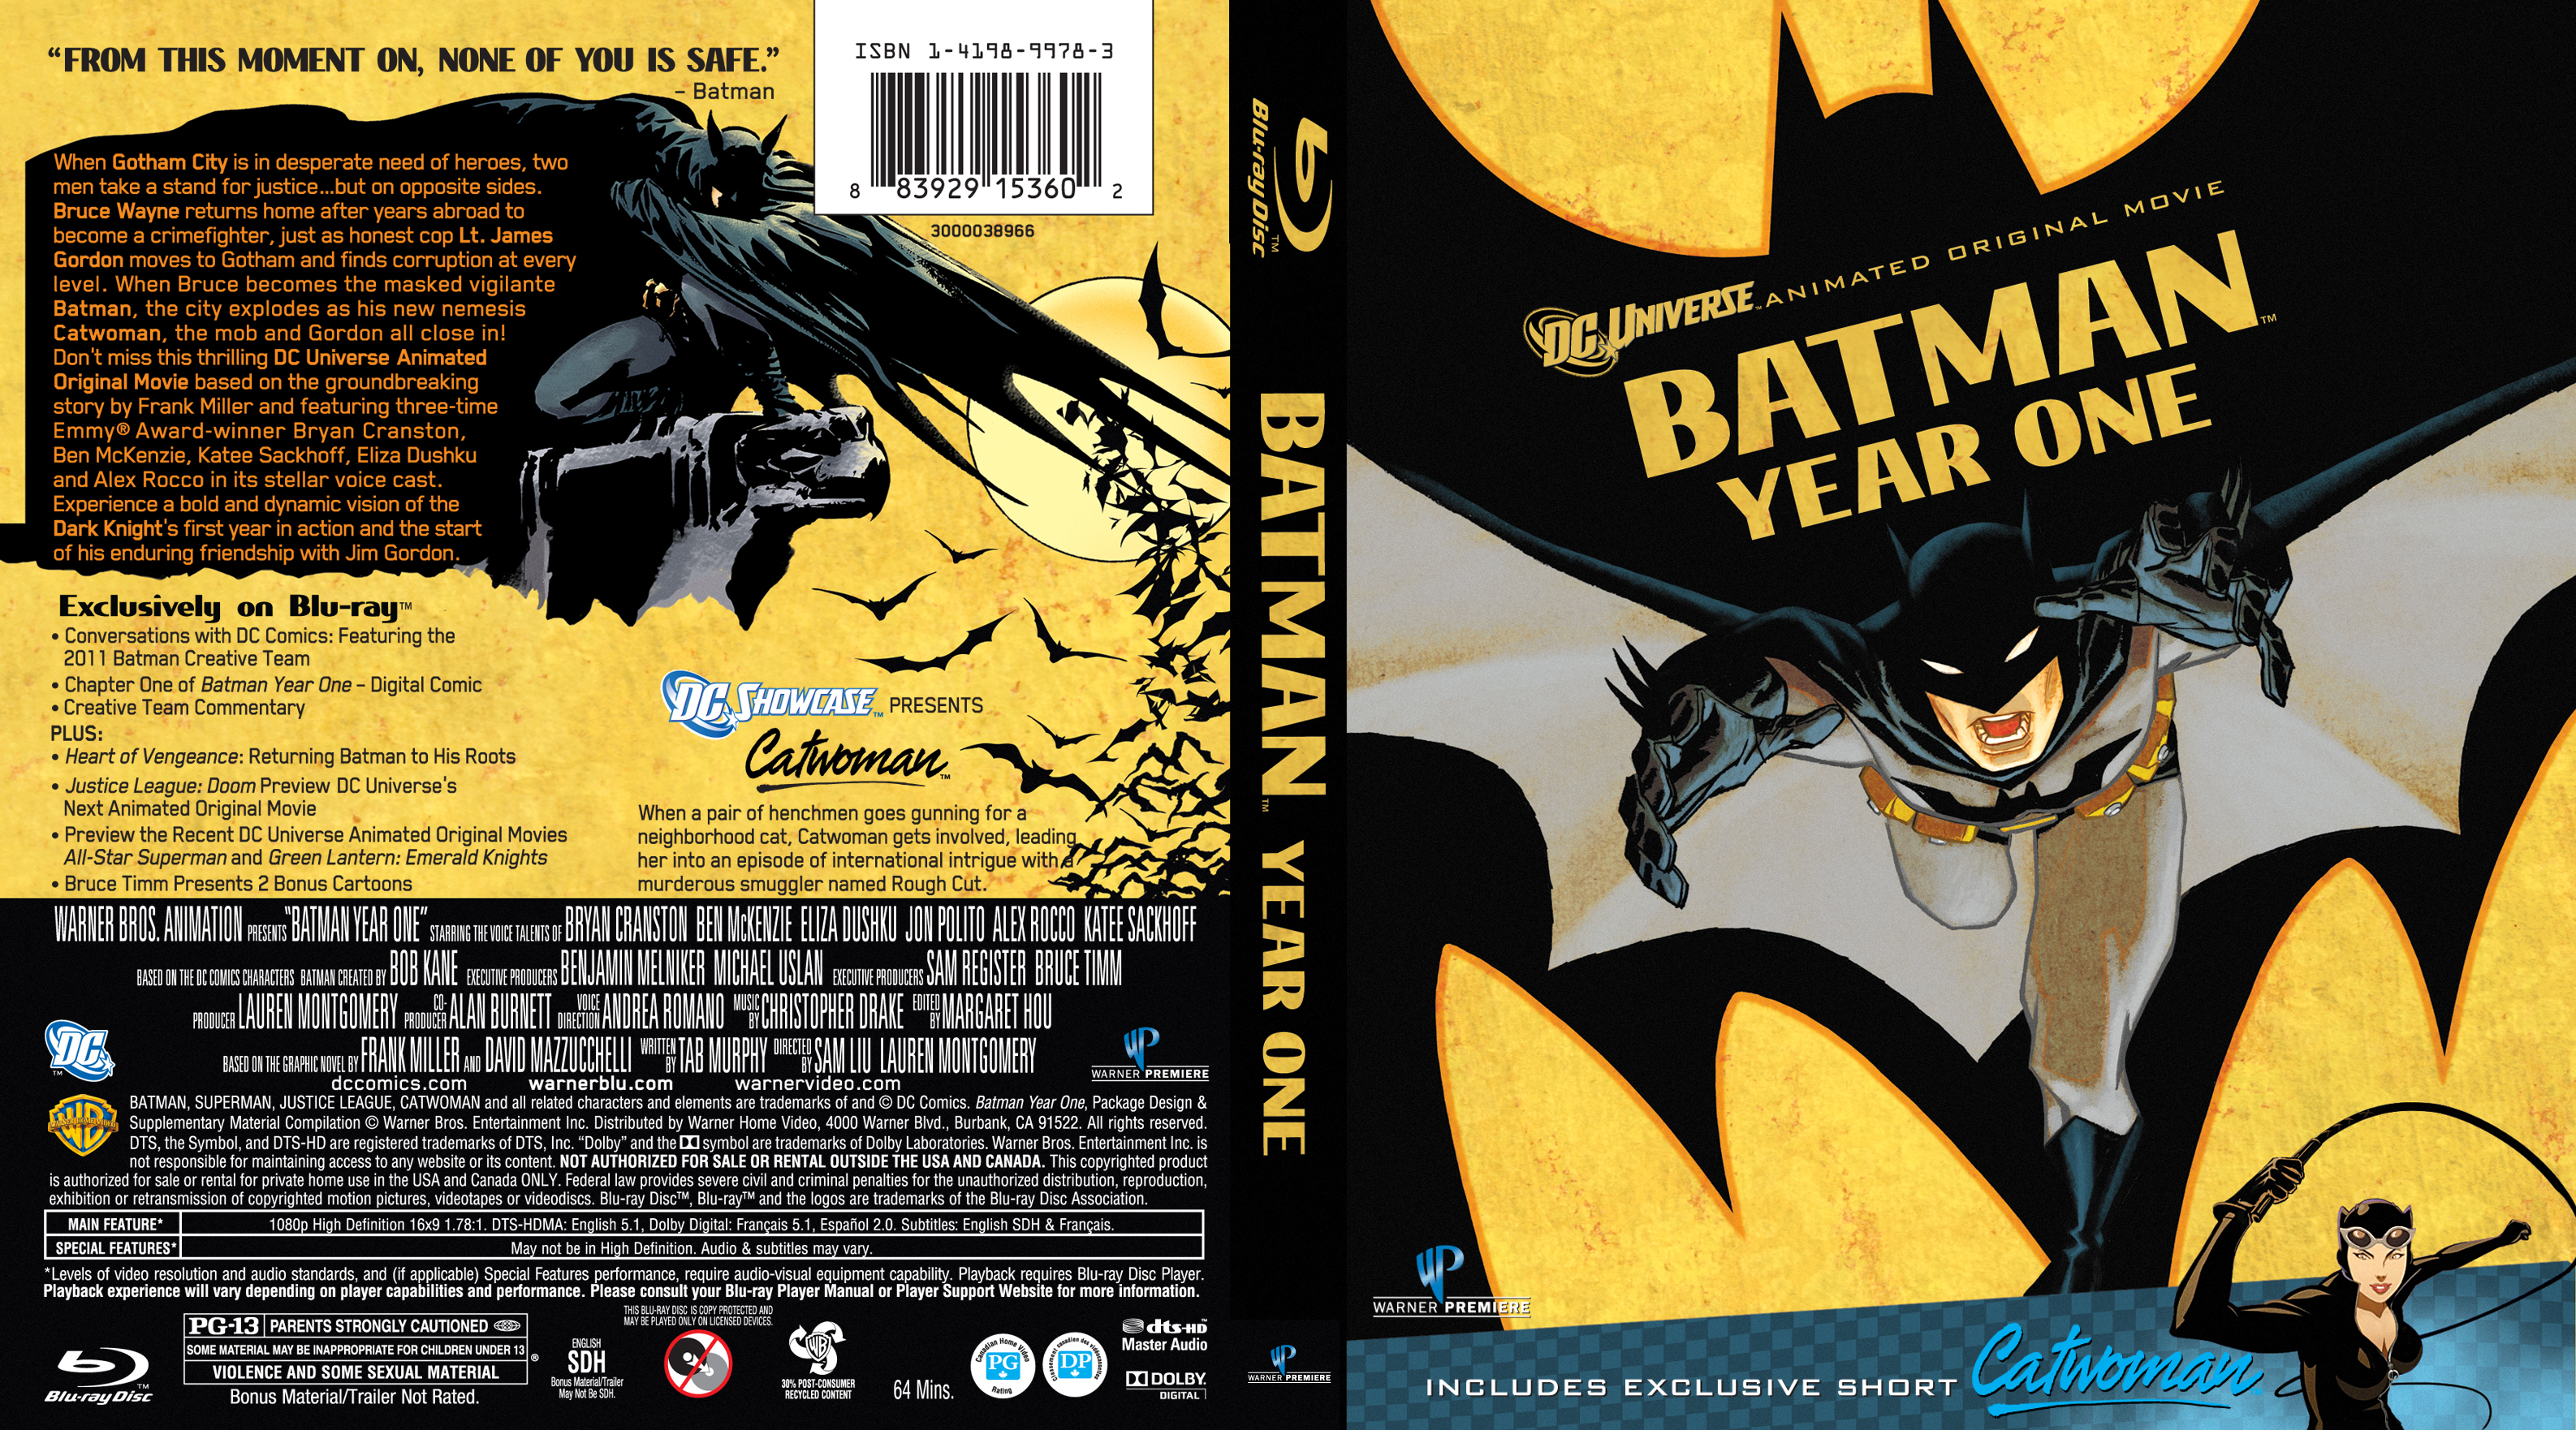 Jaquette DVD Batman - Year one Zone 1 (BLU-RAY)